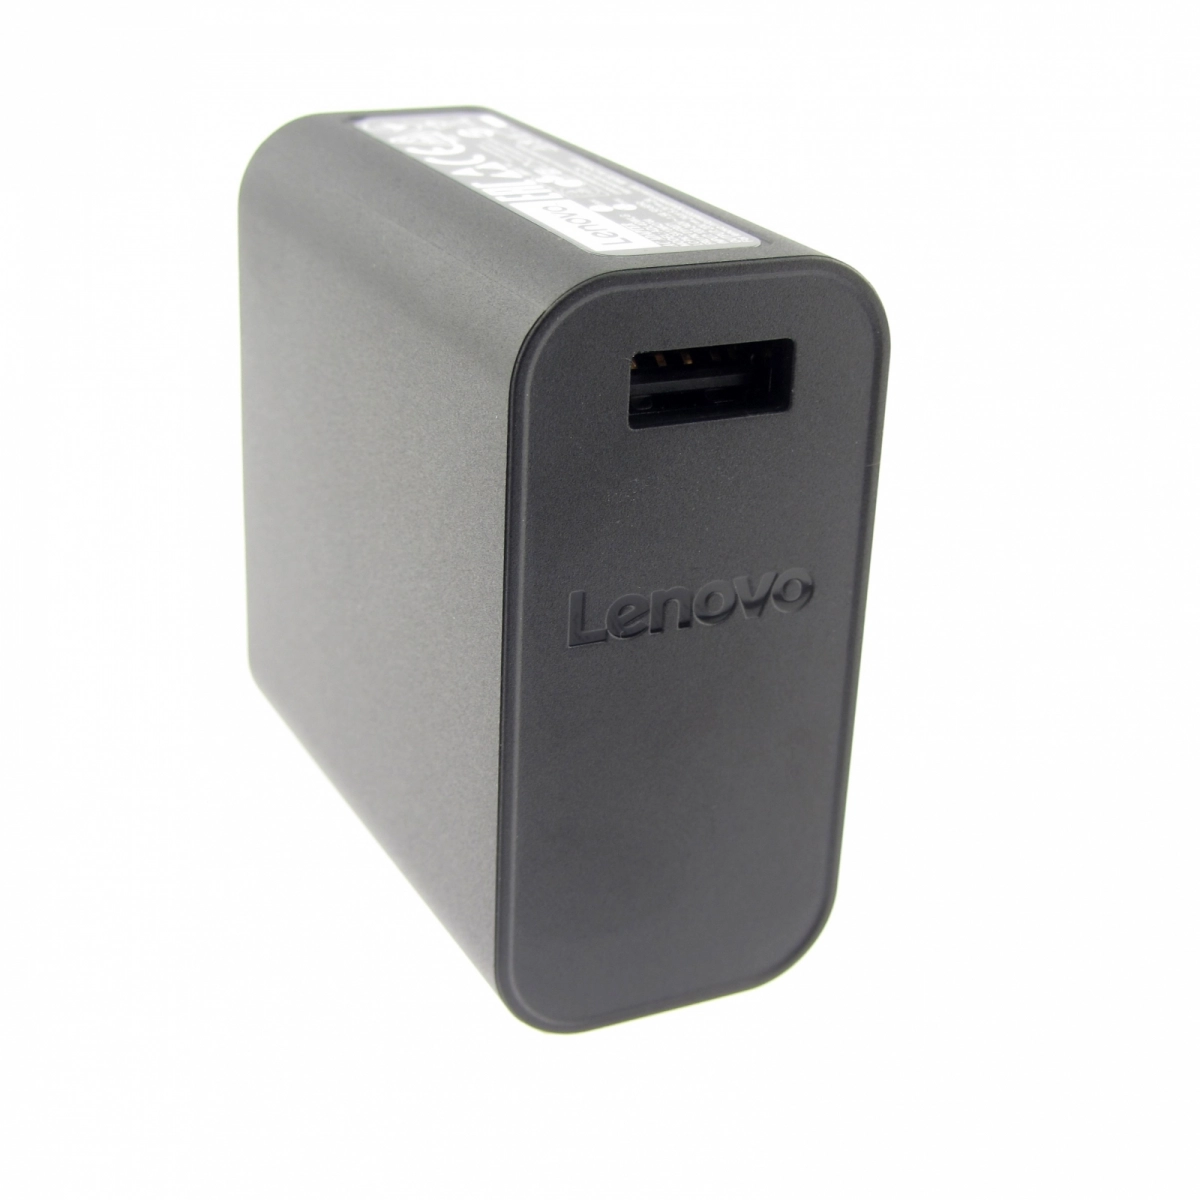 Original Netzteil für LENOVO Delta ADL40WDB, 20V, 2A, Stecker USB, ohne USB-Kabel